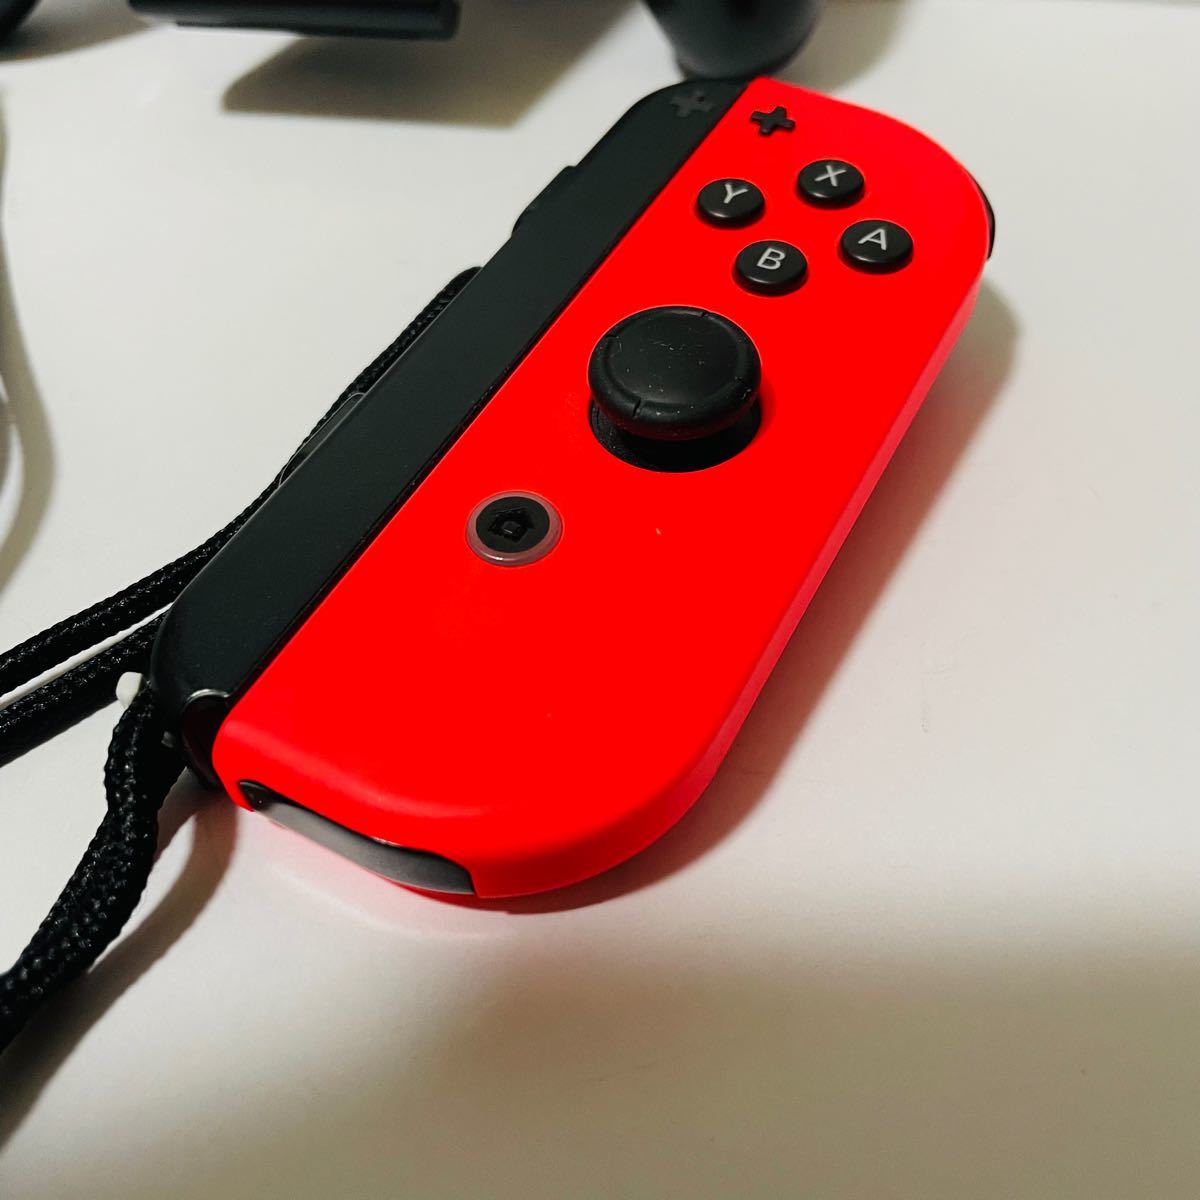 Nintendo Switch Joy-Con ネオンブルー ネオンレッド